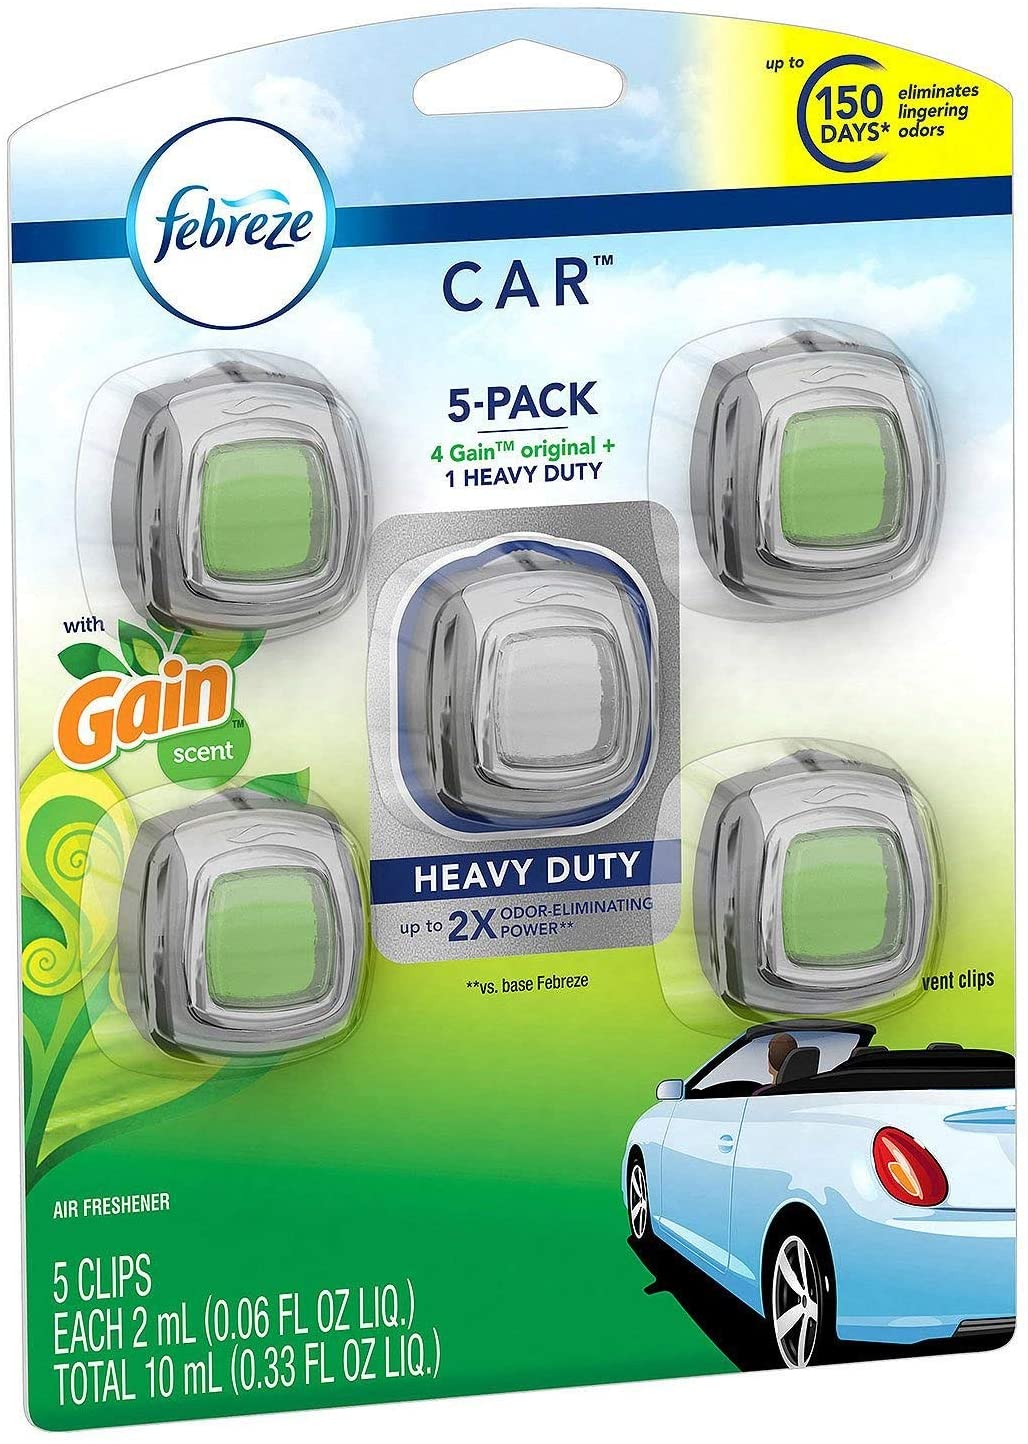 Febreze Car Air Freshener 5-Pack, 4 Gain Original Scent + 1 Heavy